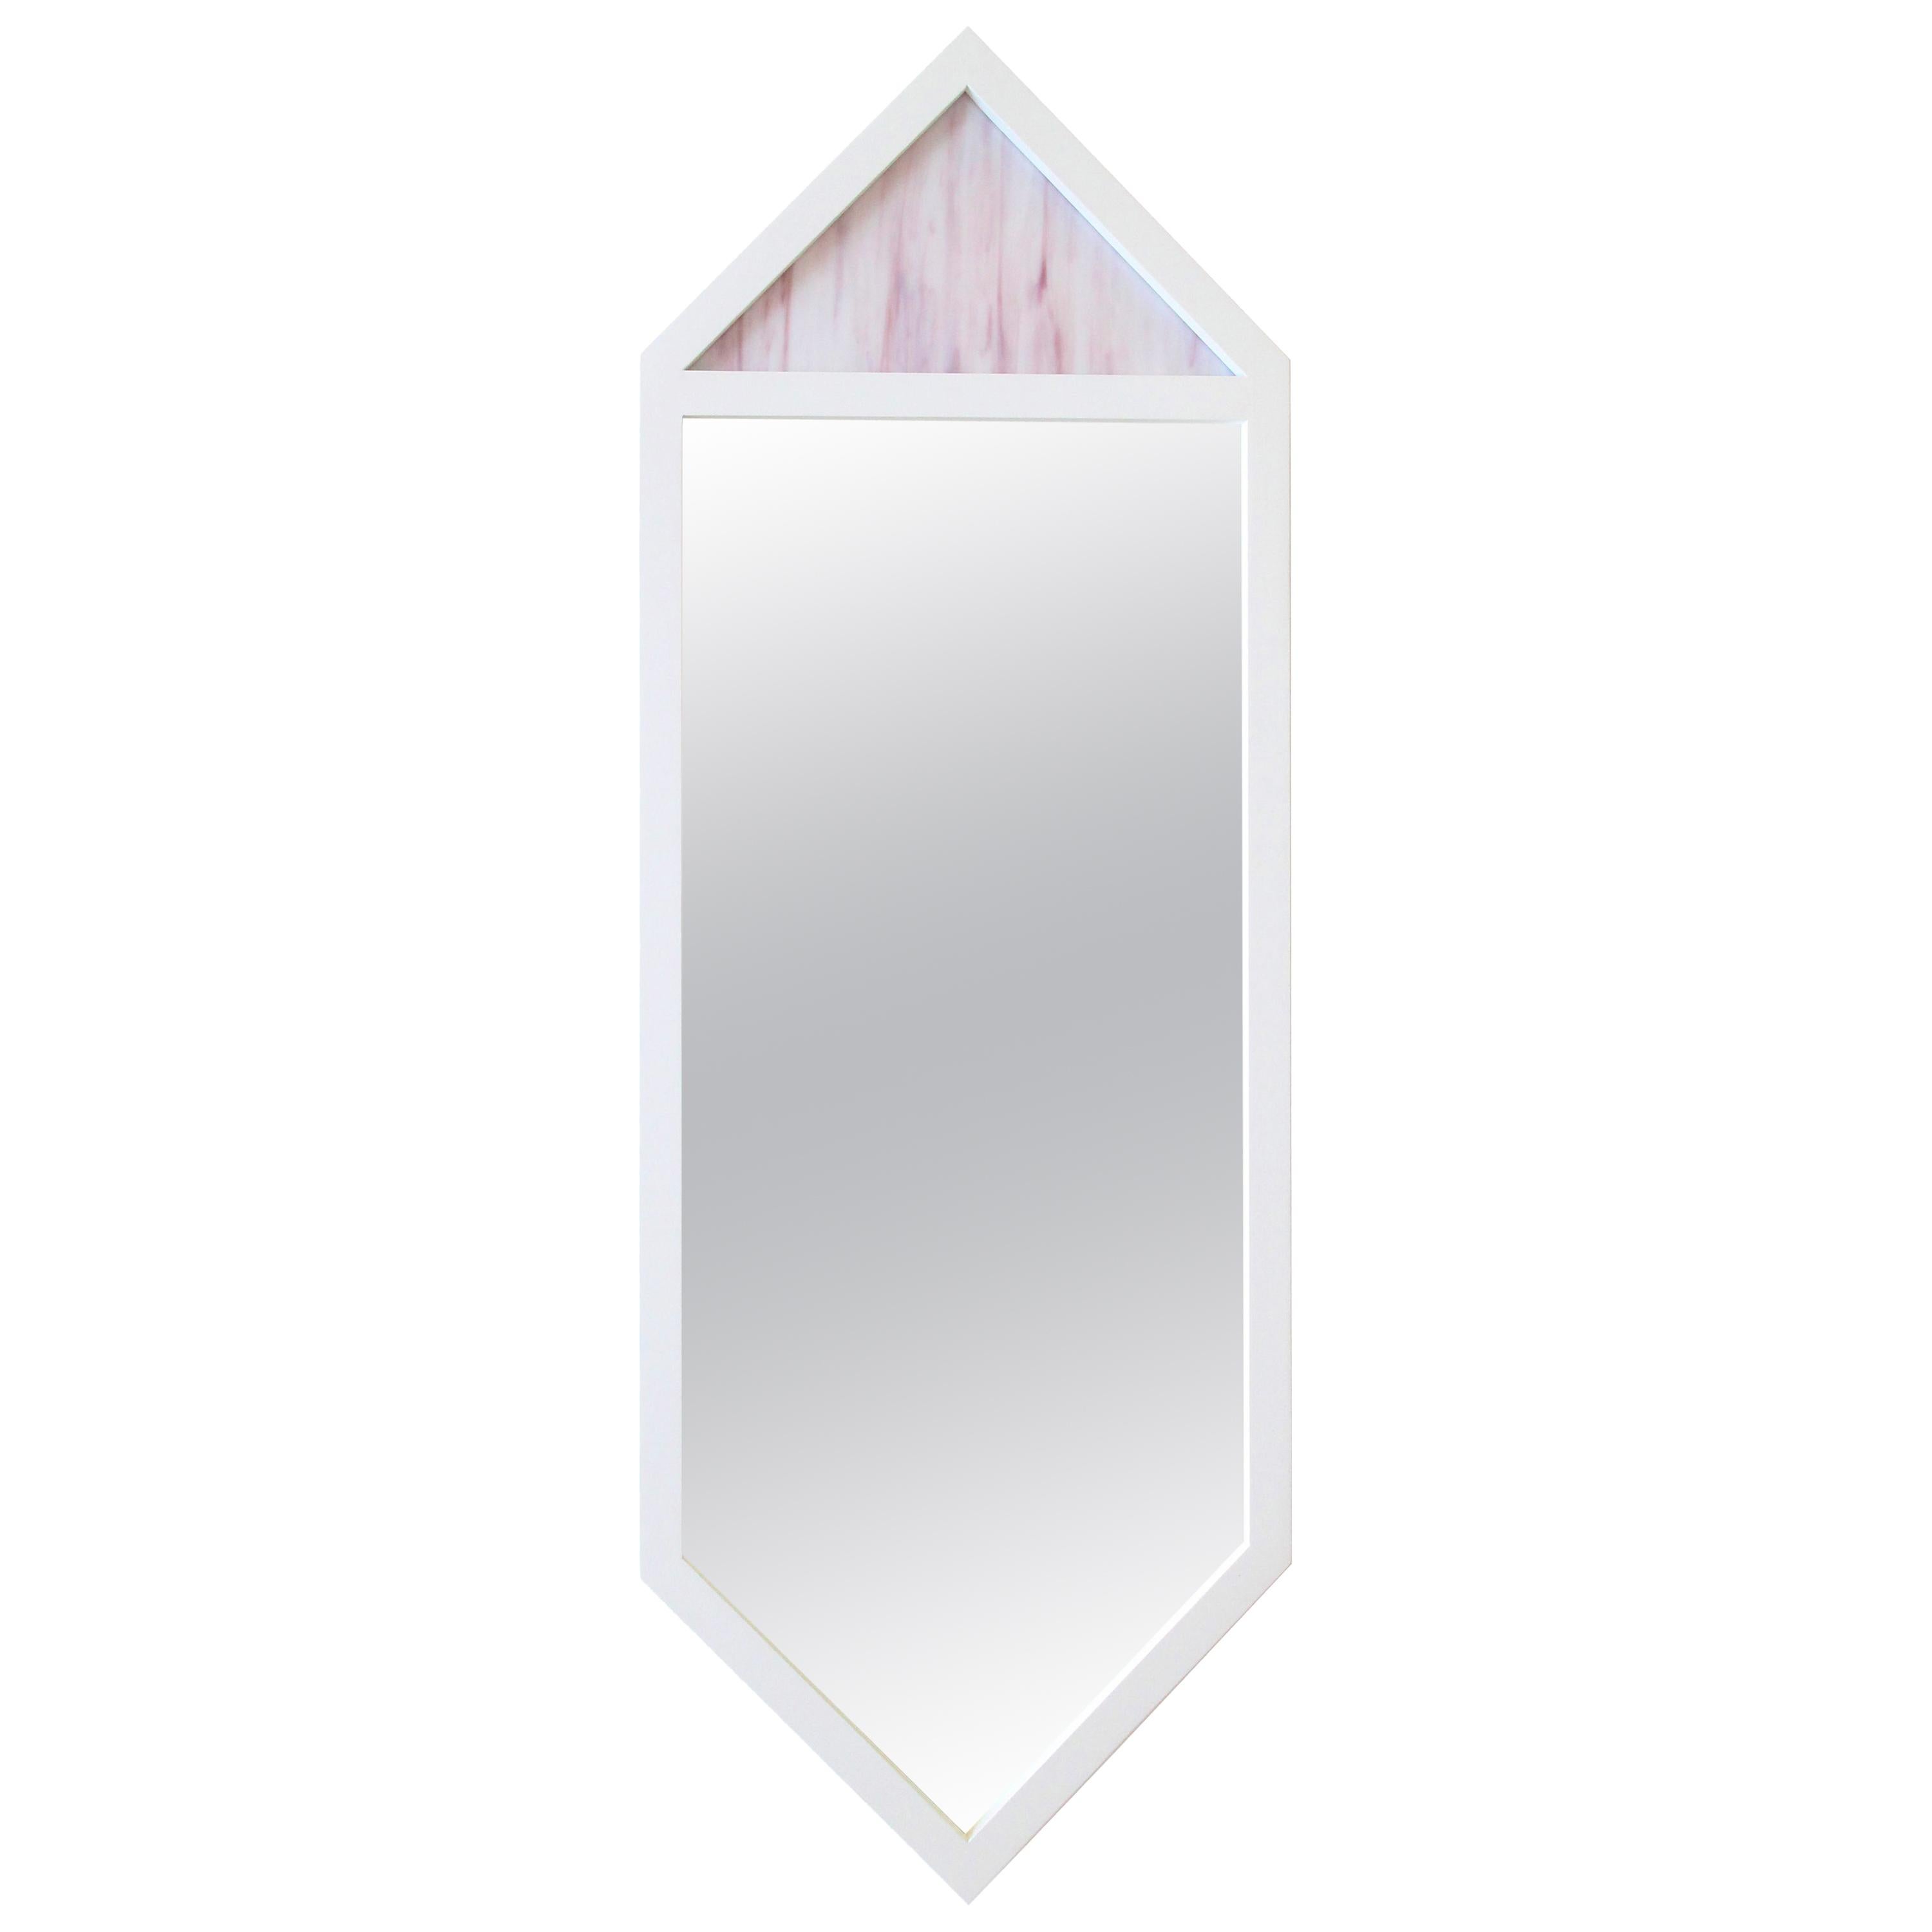 Contemporary "Crystal Pink Mirror" by Alex Drew & No One, 2016